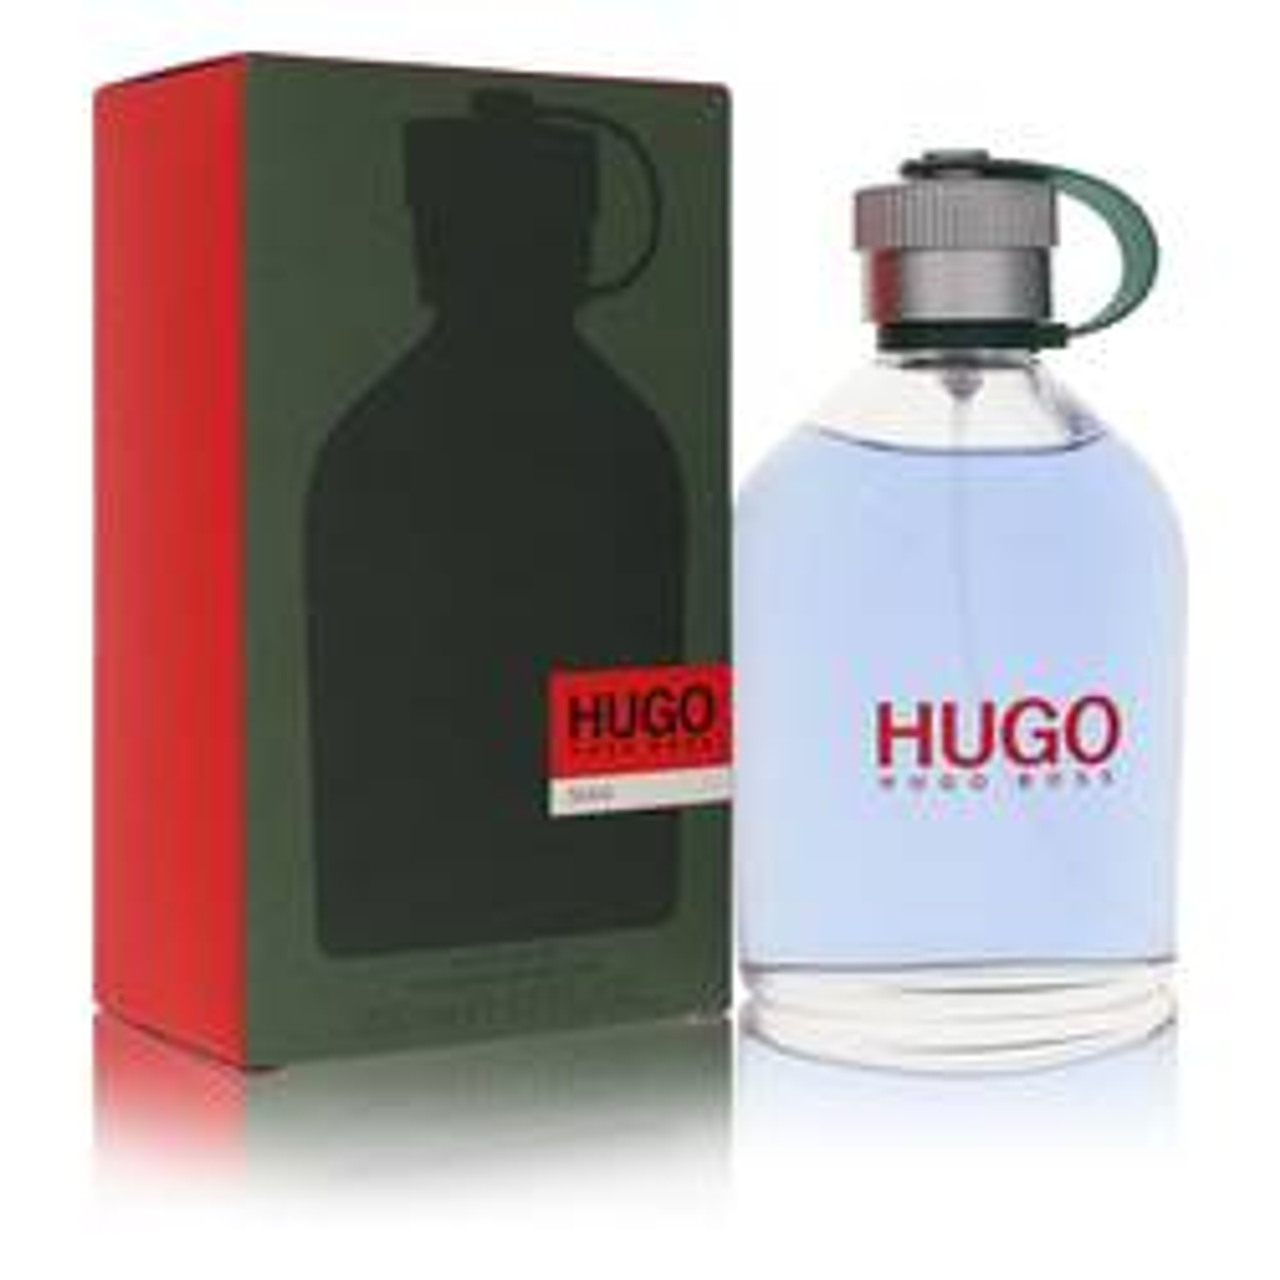 Hugo Cologne By Hugo Boss Eau De Toilette Spray 6.7 oz for Men - *Pre-Order